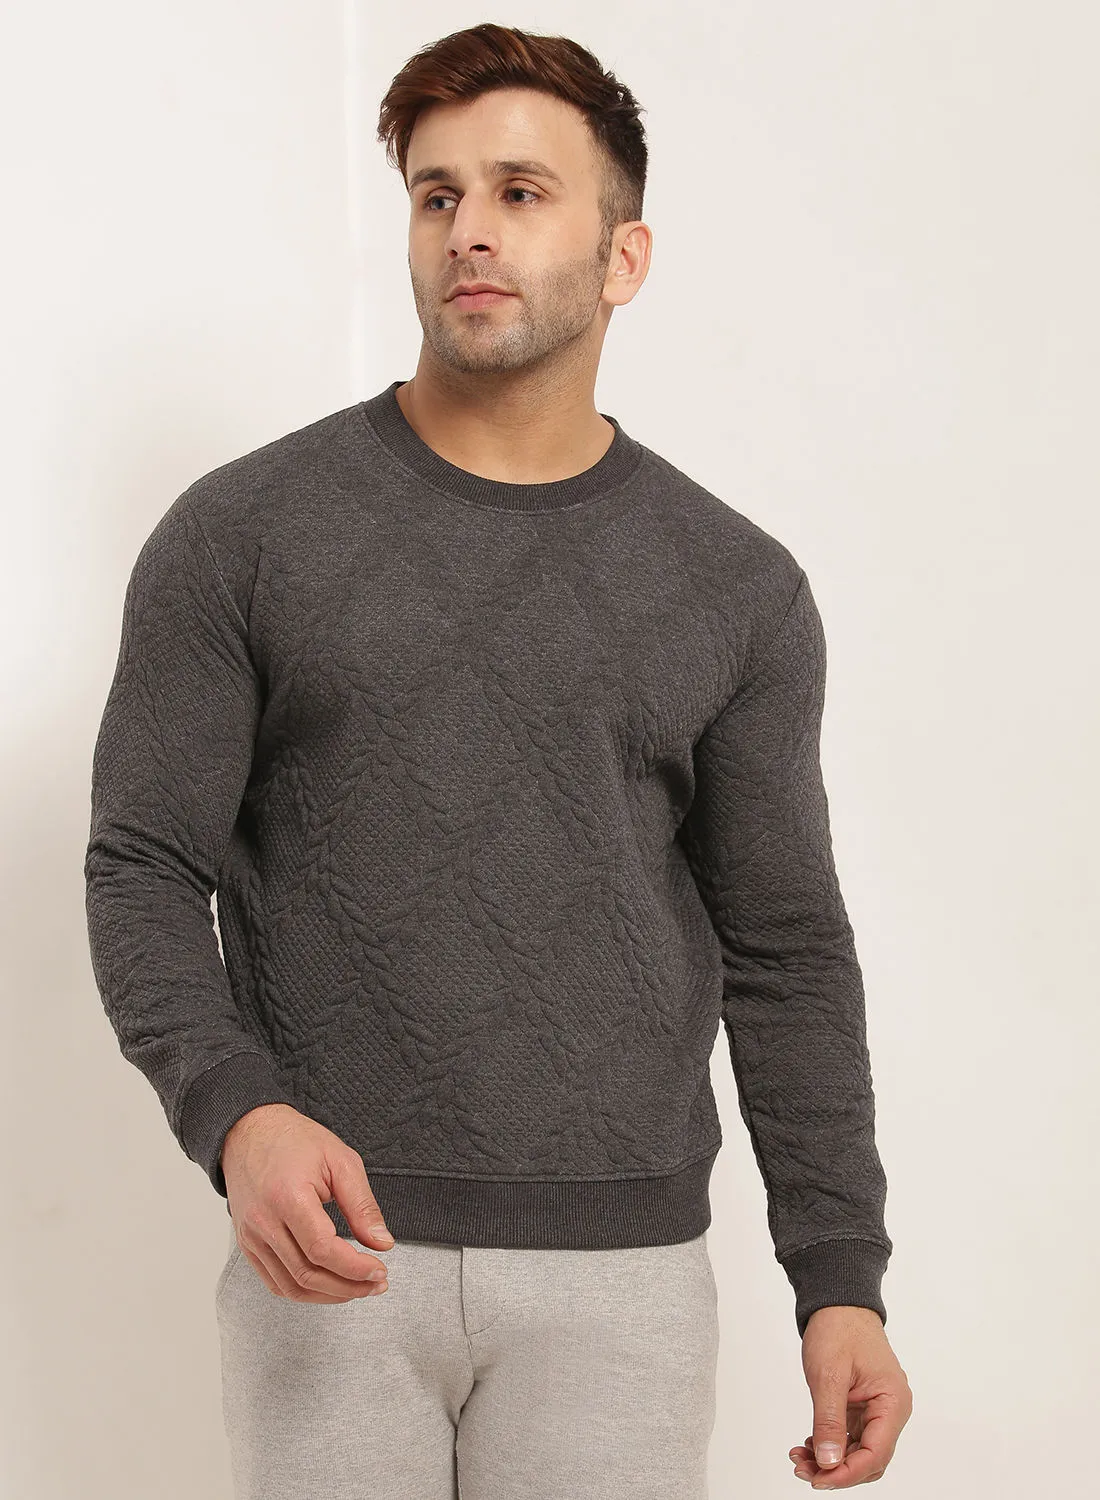 QUWA Men's Solid Design Long Sleeves Sweatshirt Black